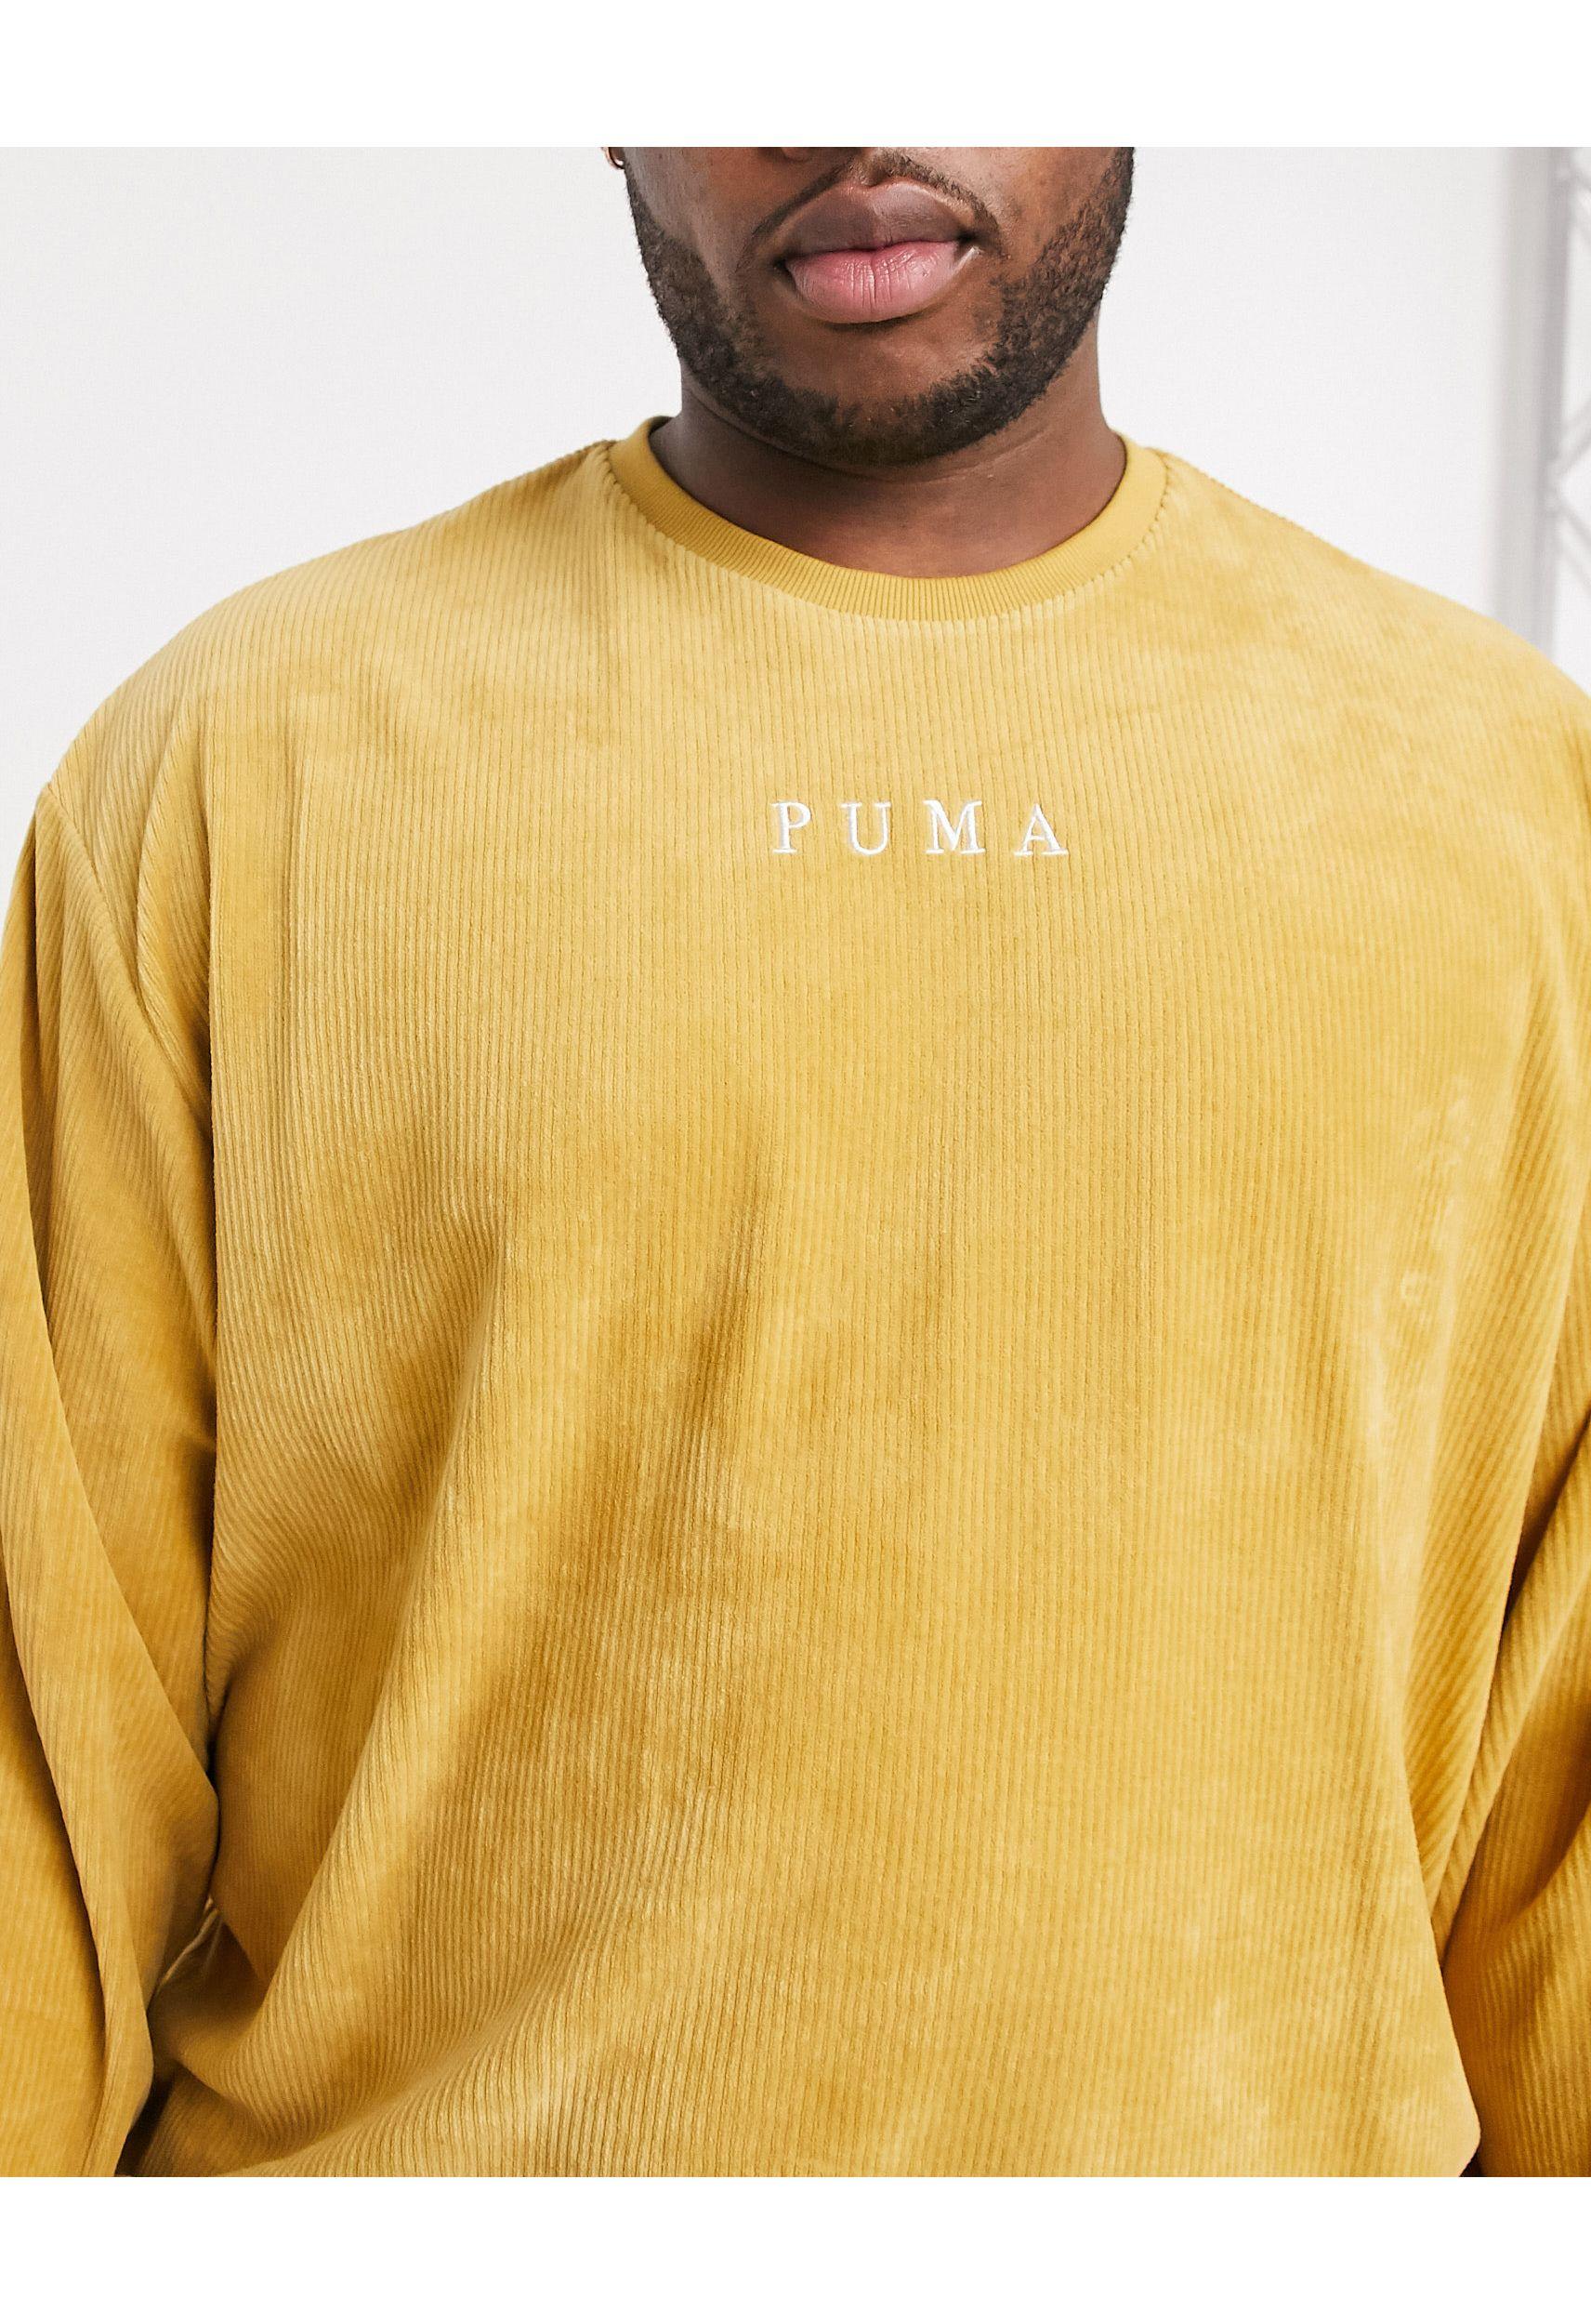 PUMA Cotton Plus Cord Sweatshirt in Yellow for Men - Lyst